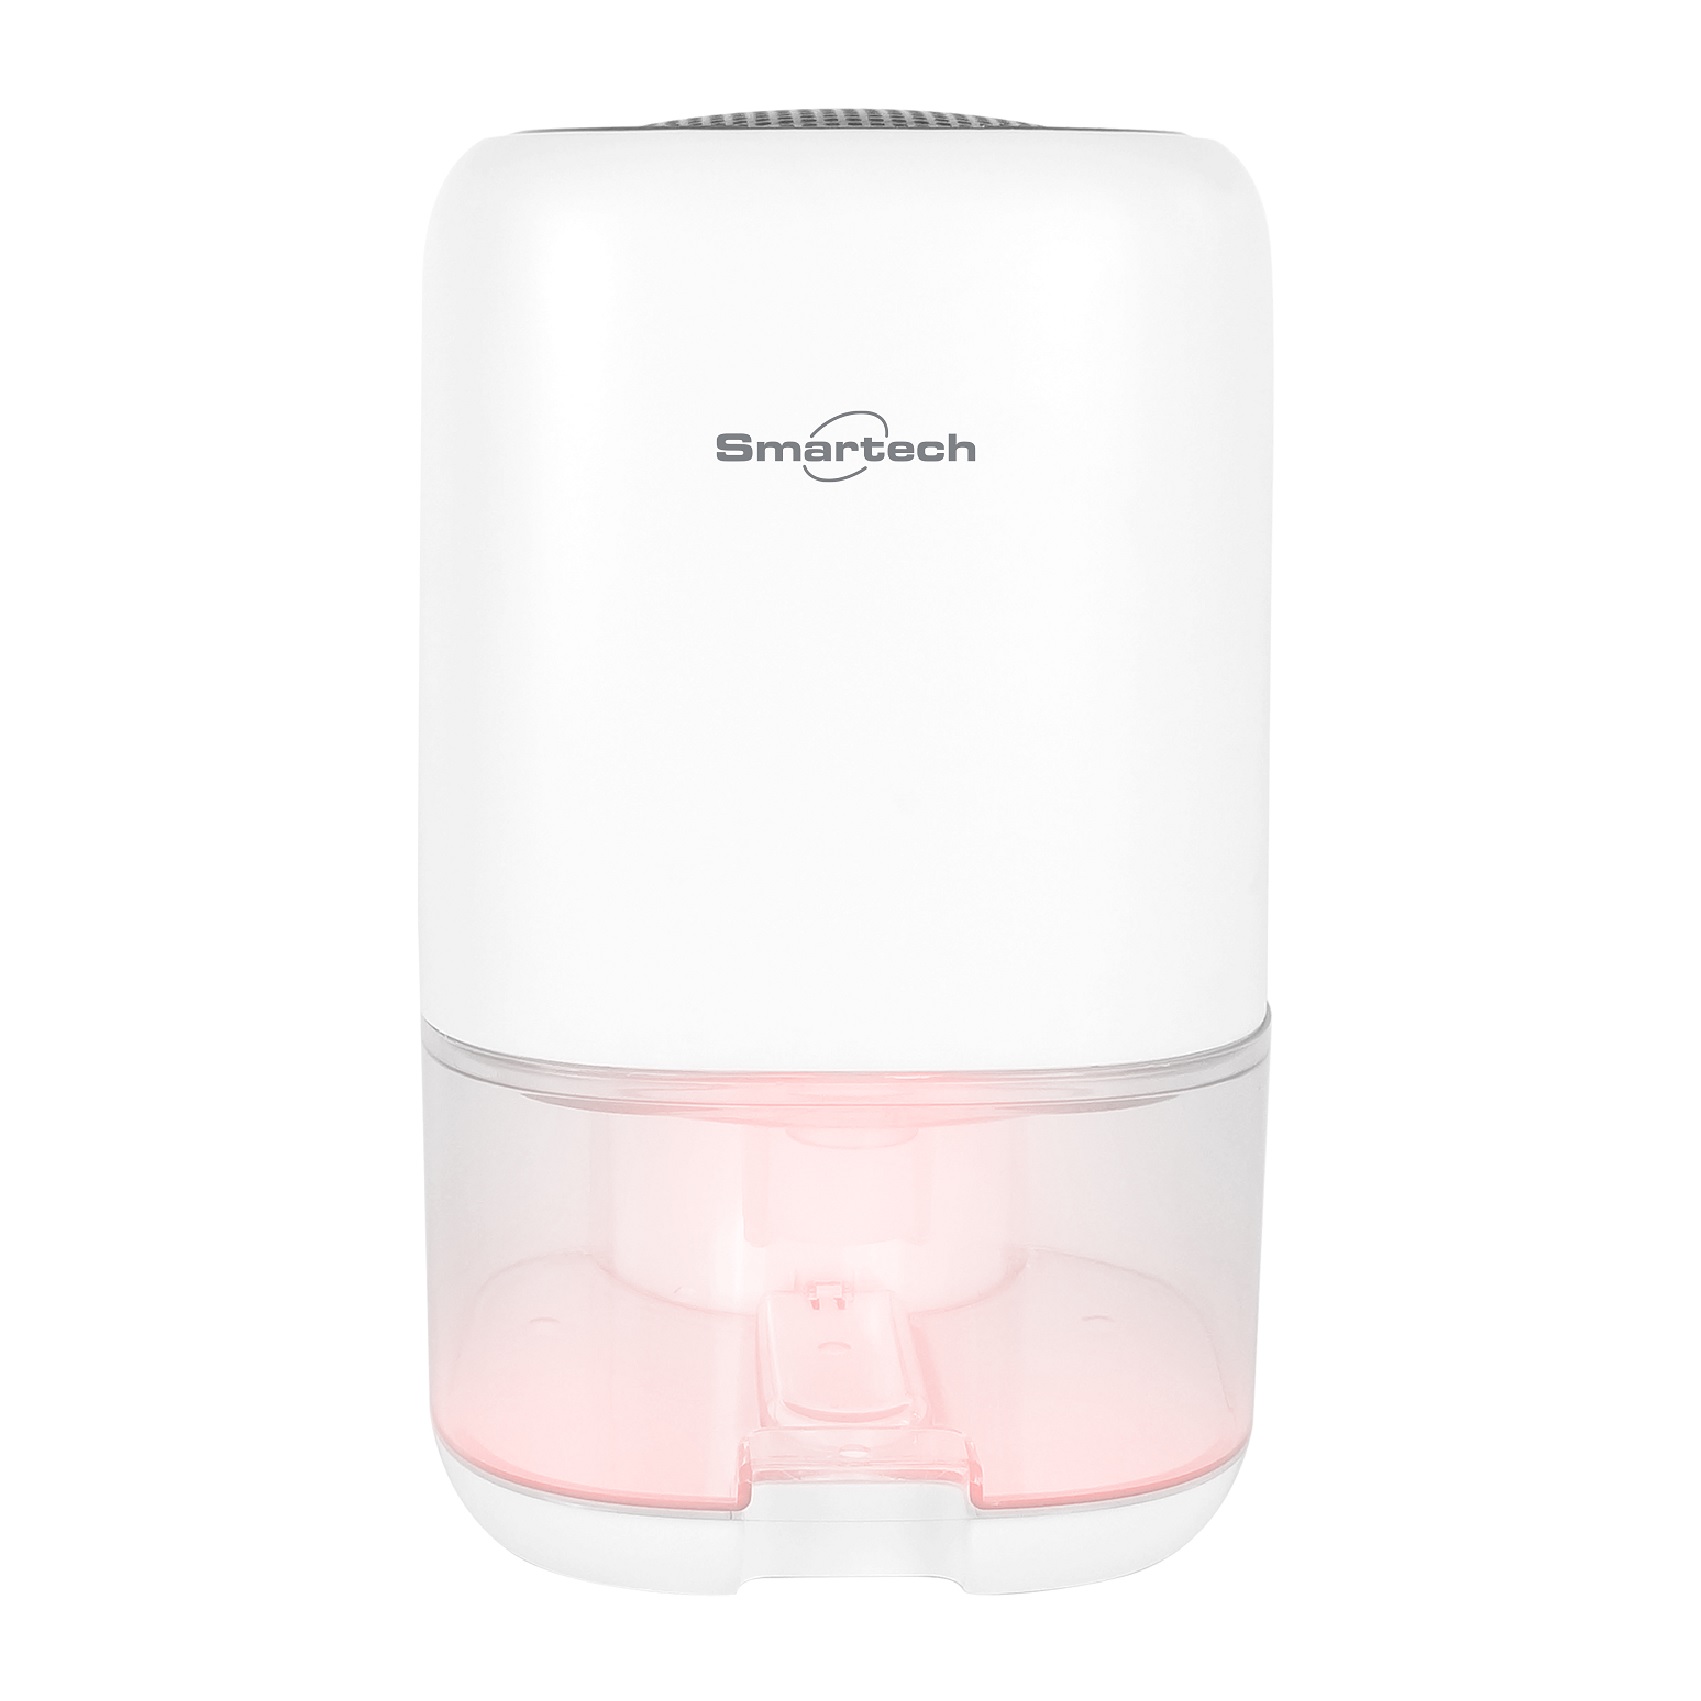 Smartech Smart Eco Fresh Mini Luminous Dehumidifier (SD-1900) (White), , large image number 2